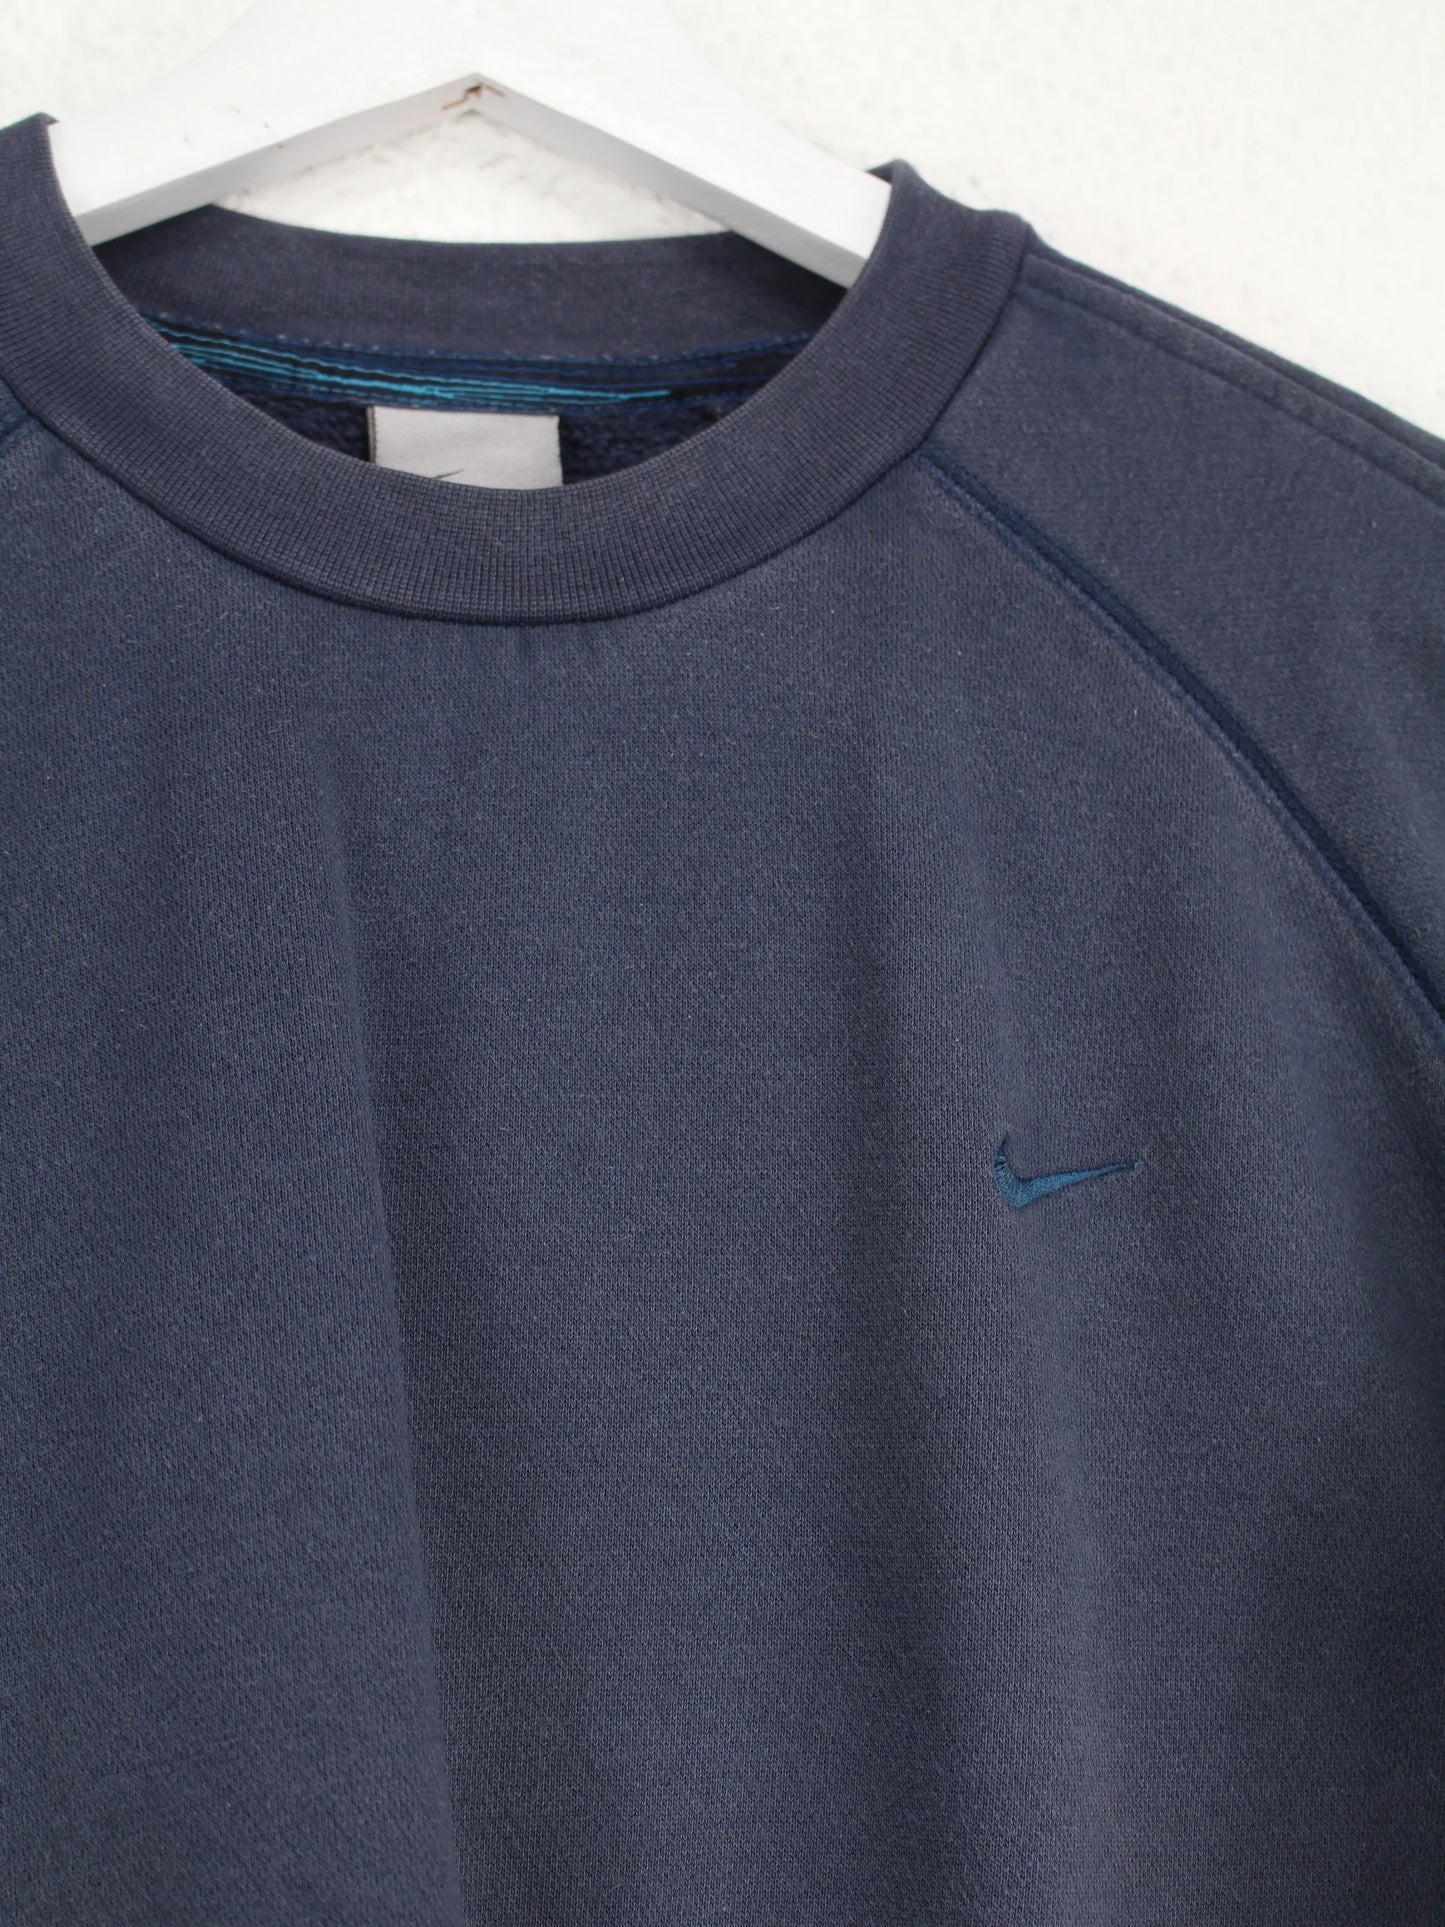 Nike Sweater Blau S